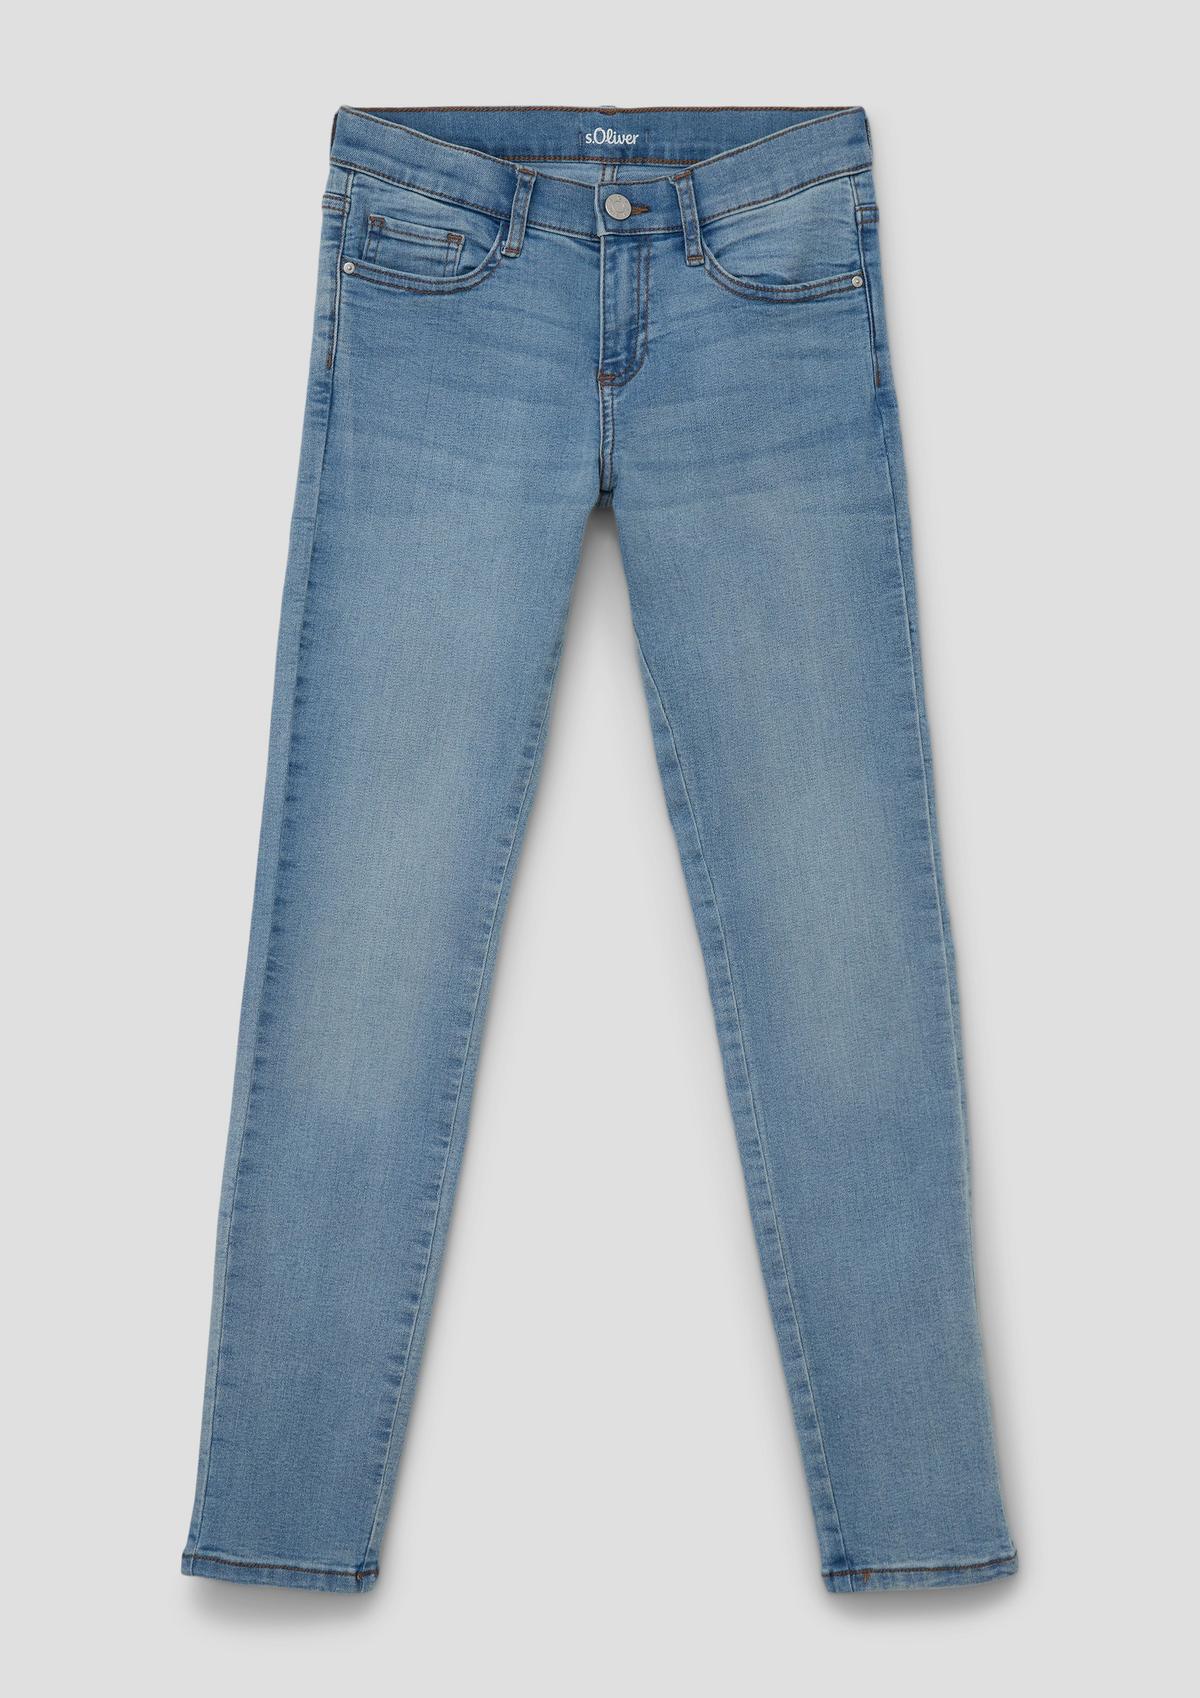 Jeans Suri / regular fit / mid rise / slim leg